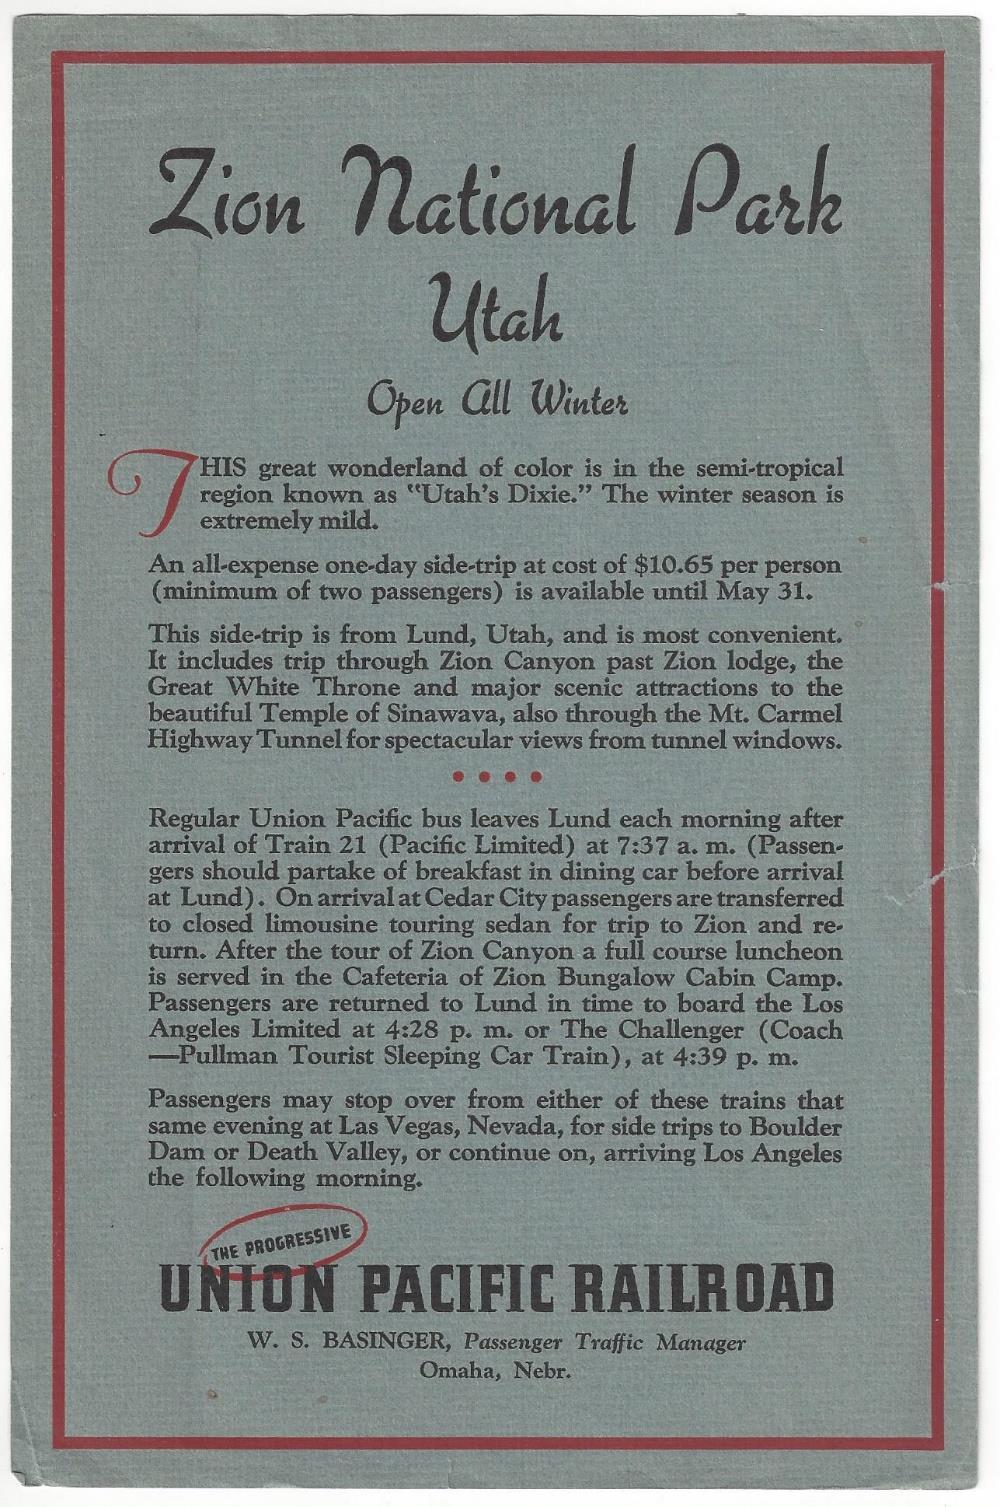 Early U.P. Zion Advertisement 15- [Union Pacific]. Zion National Park Utah: Open All Winter. [Omaha, NE]: Union Pacific Railroad, (c.1920).